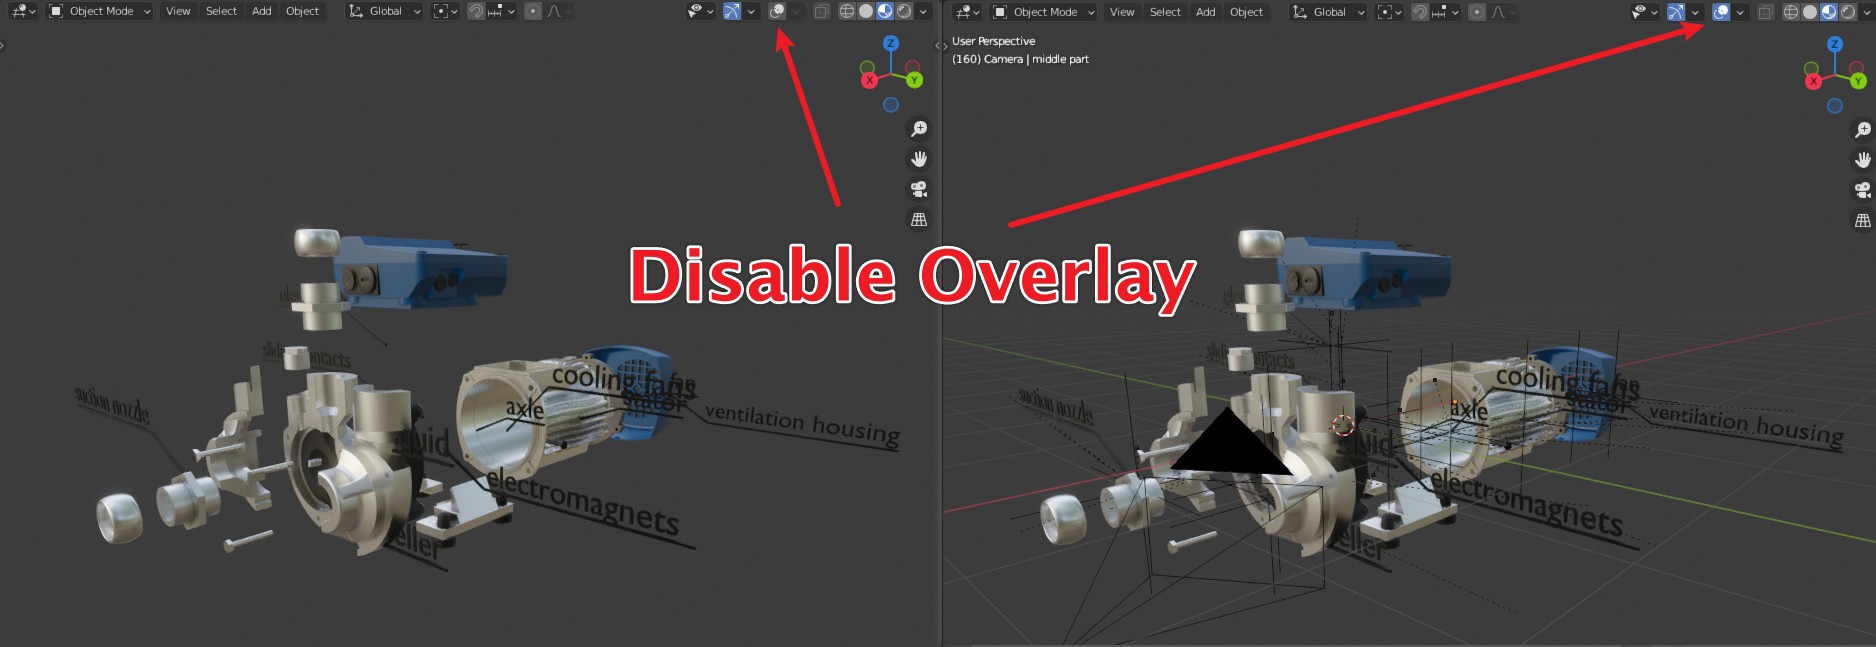 Disable Overlay.jpg